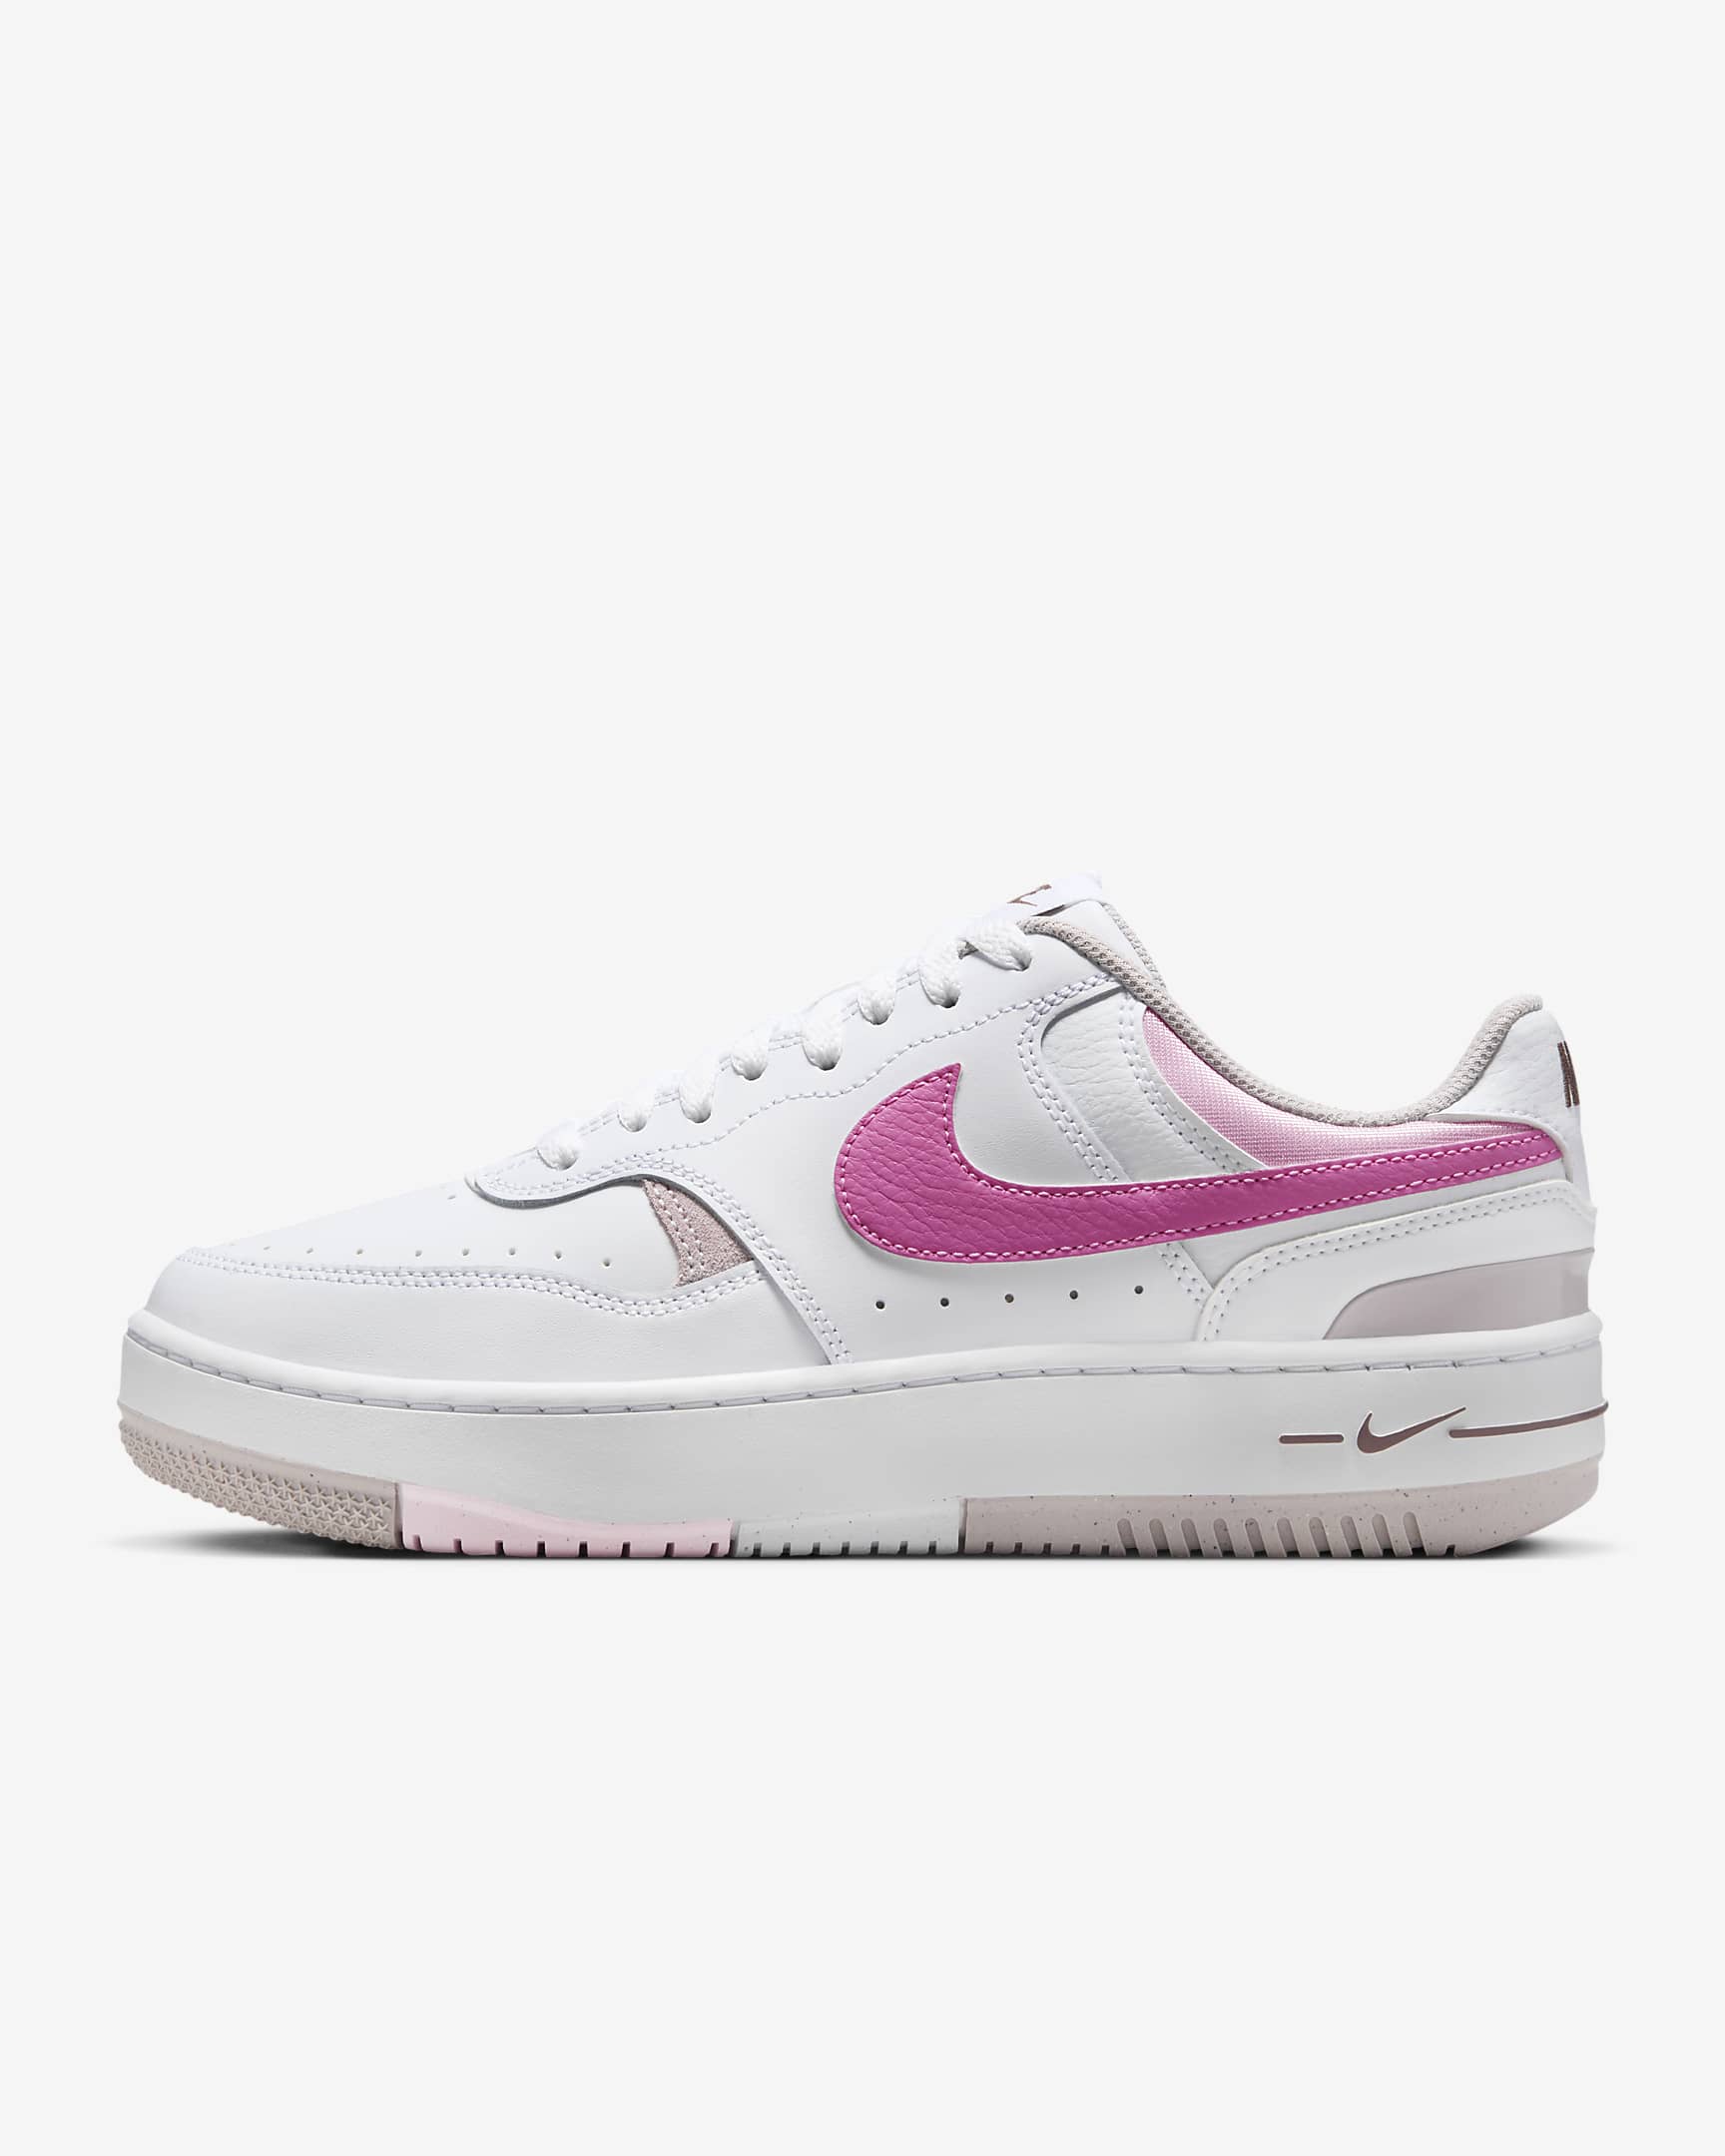 Sko Nike Gamma Force för kvinnor - Vit/Platinum Violet/Pink Foam/Playful Pink